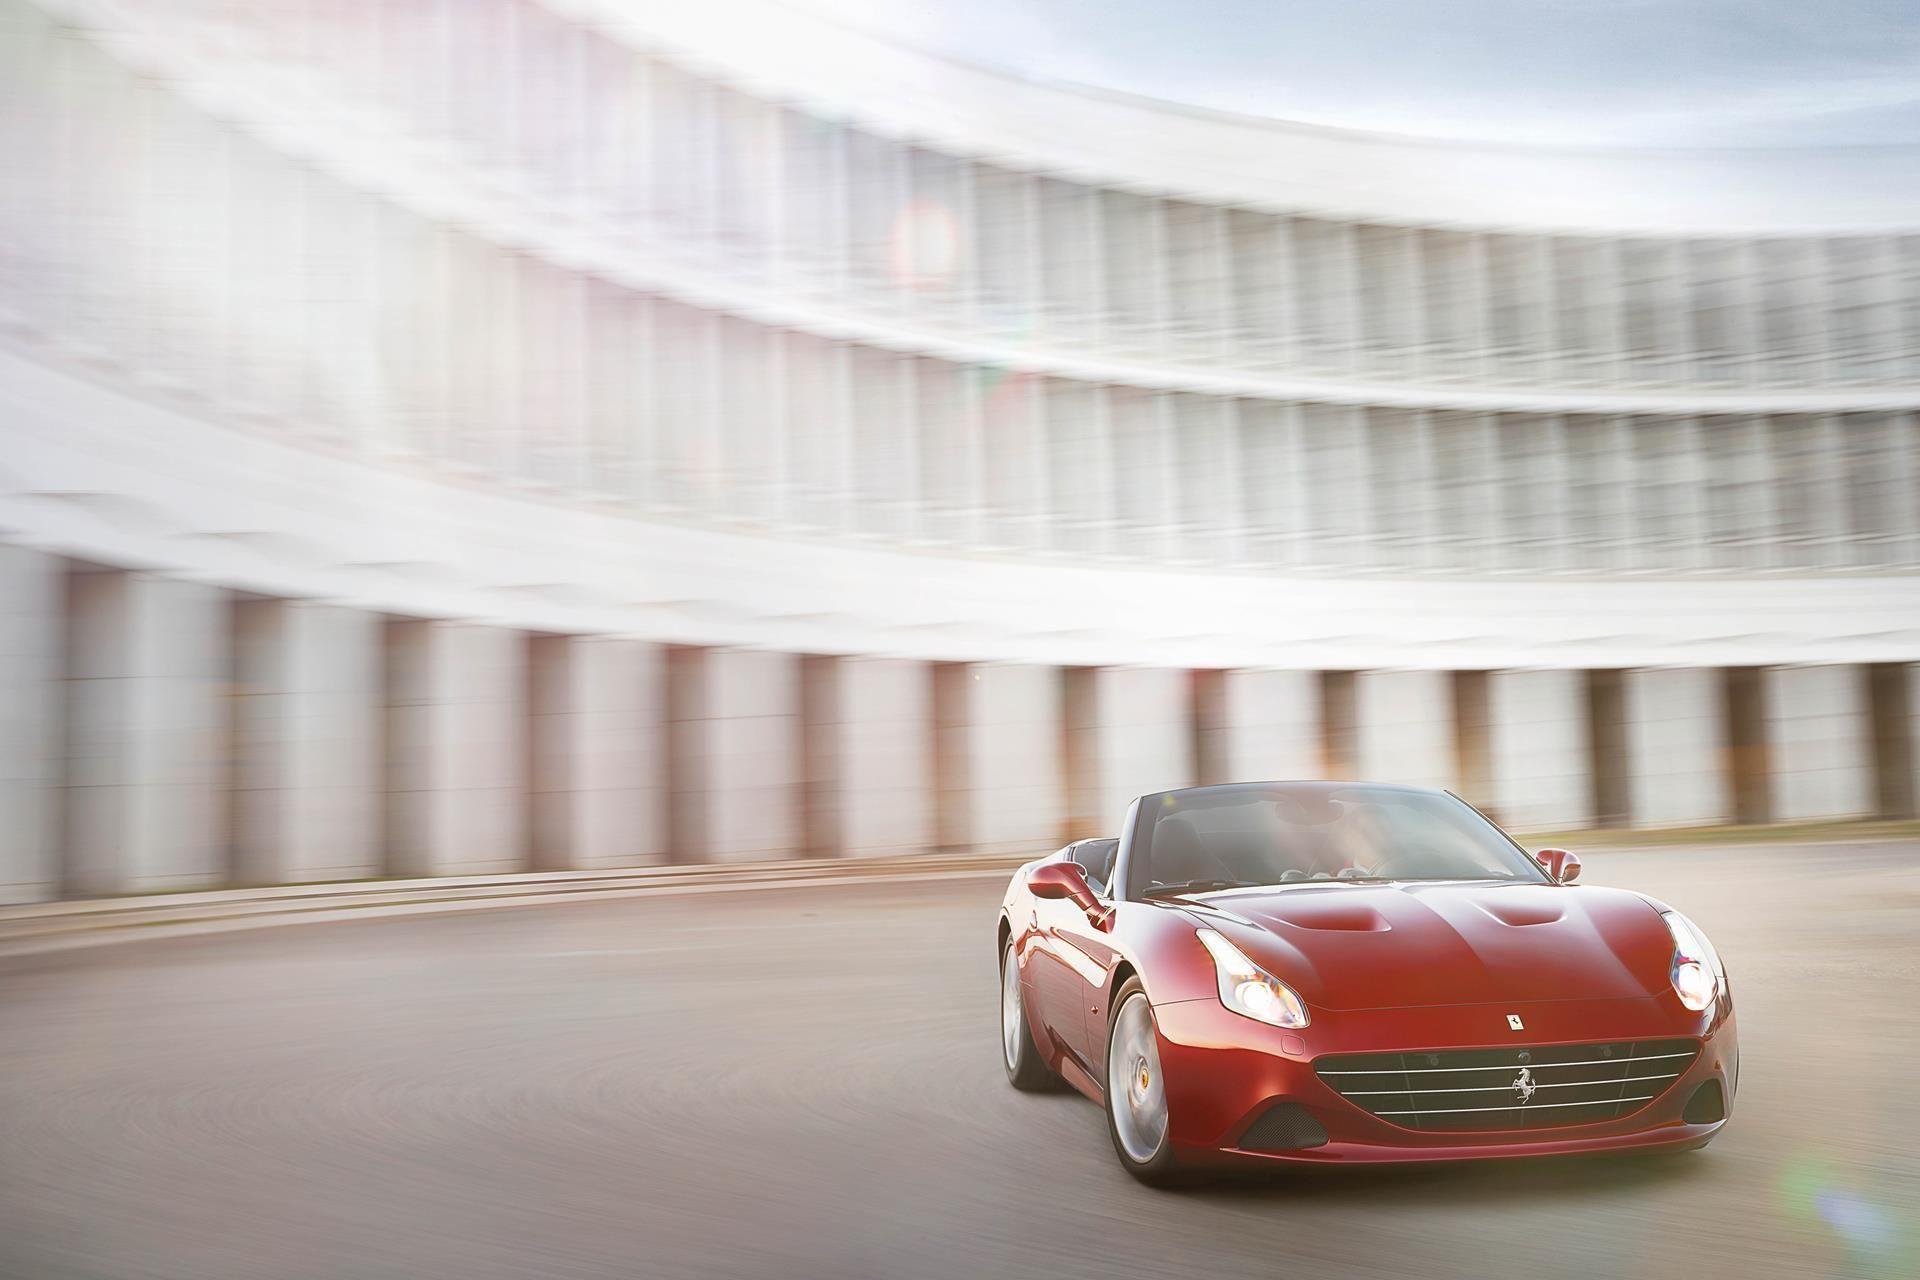 Ferrari California T Supercar Image 2016 Speed, Wallpaper